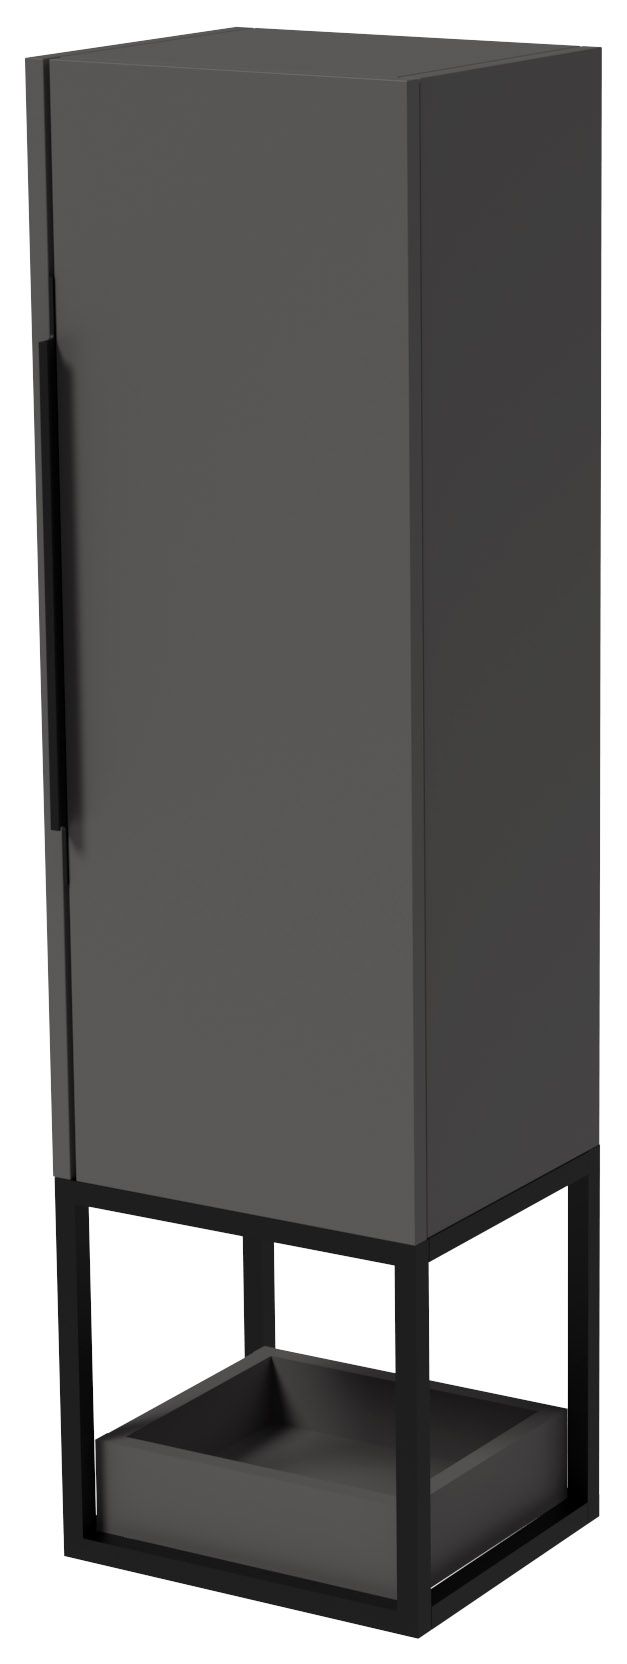 Wickes Rimini Onyx Grey Black Frame Tower Unit - 1250 x 350mm